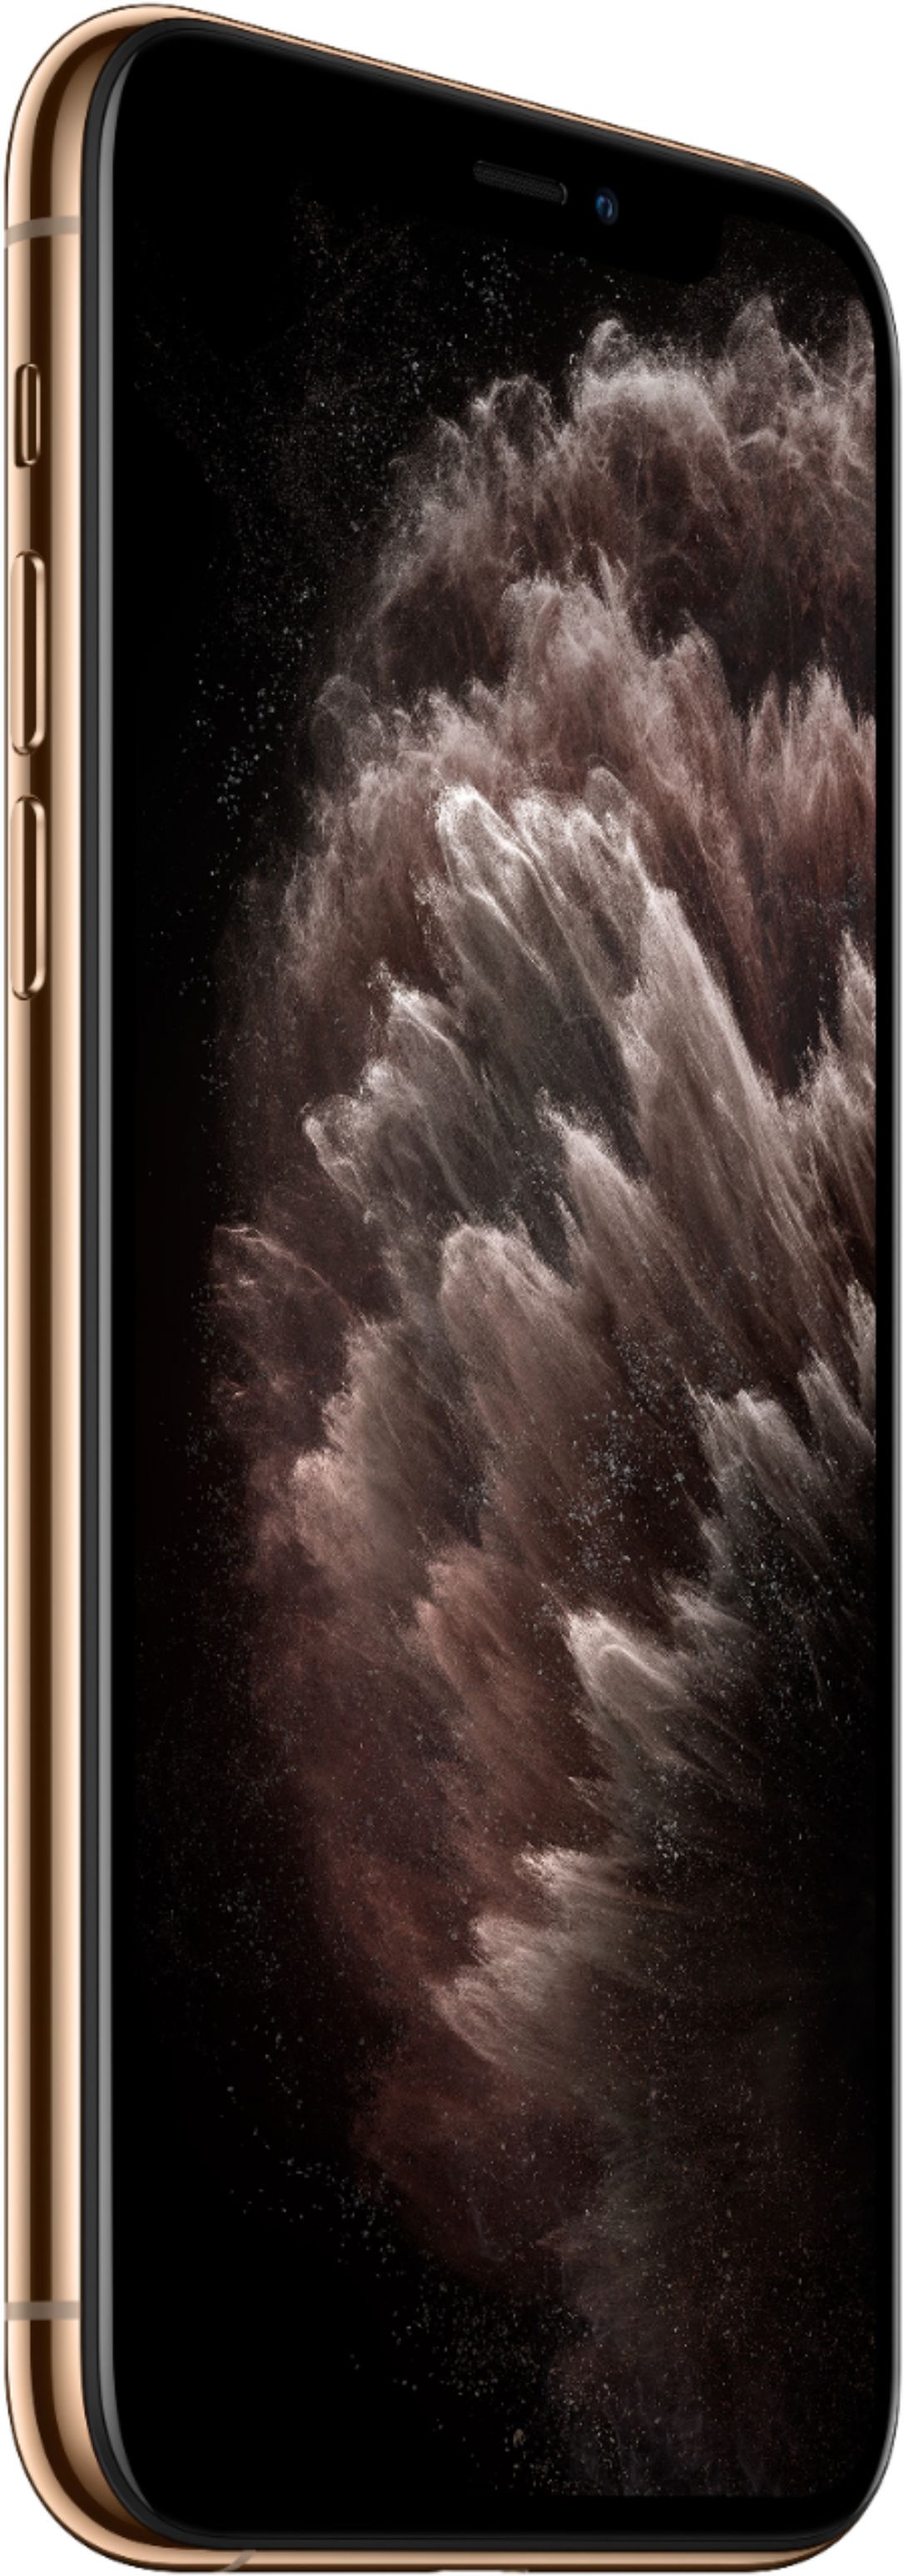 Restored Apple iPhone 11 Pro 512GB Gold Fully Unlocked Smartphone (Refurbished) - image 2 of 5